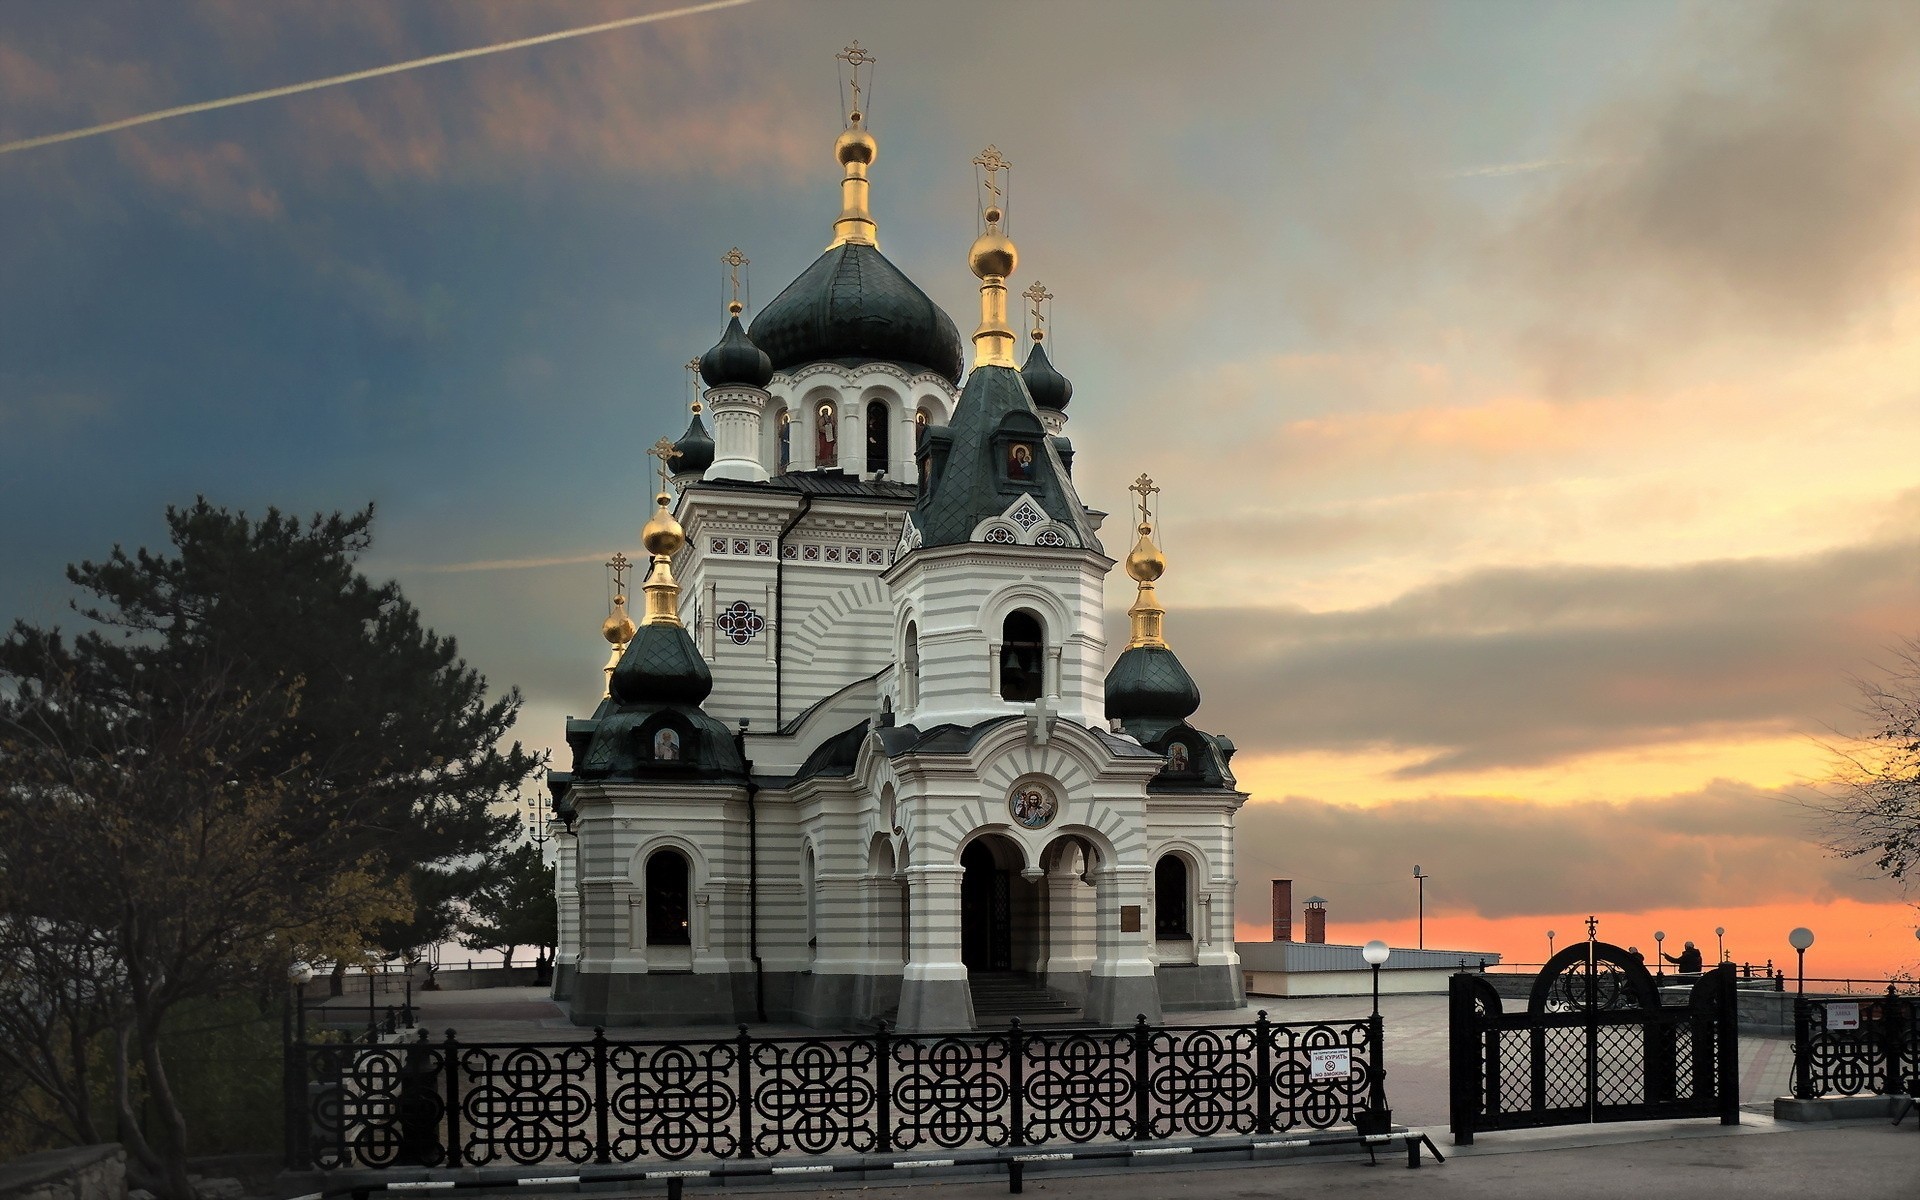 Мои храмы православия